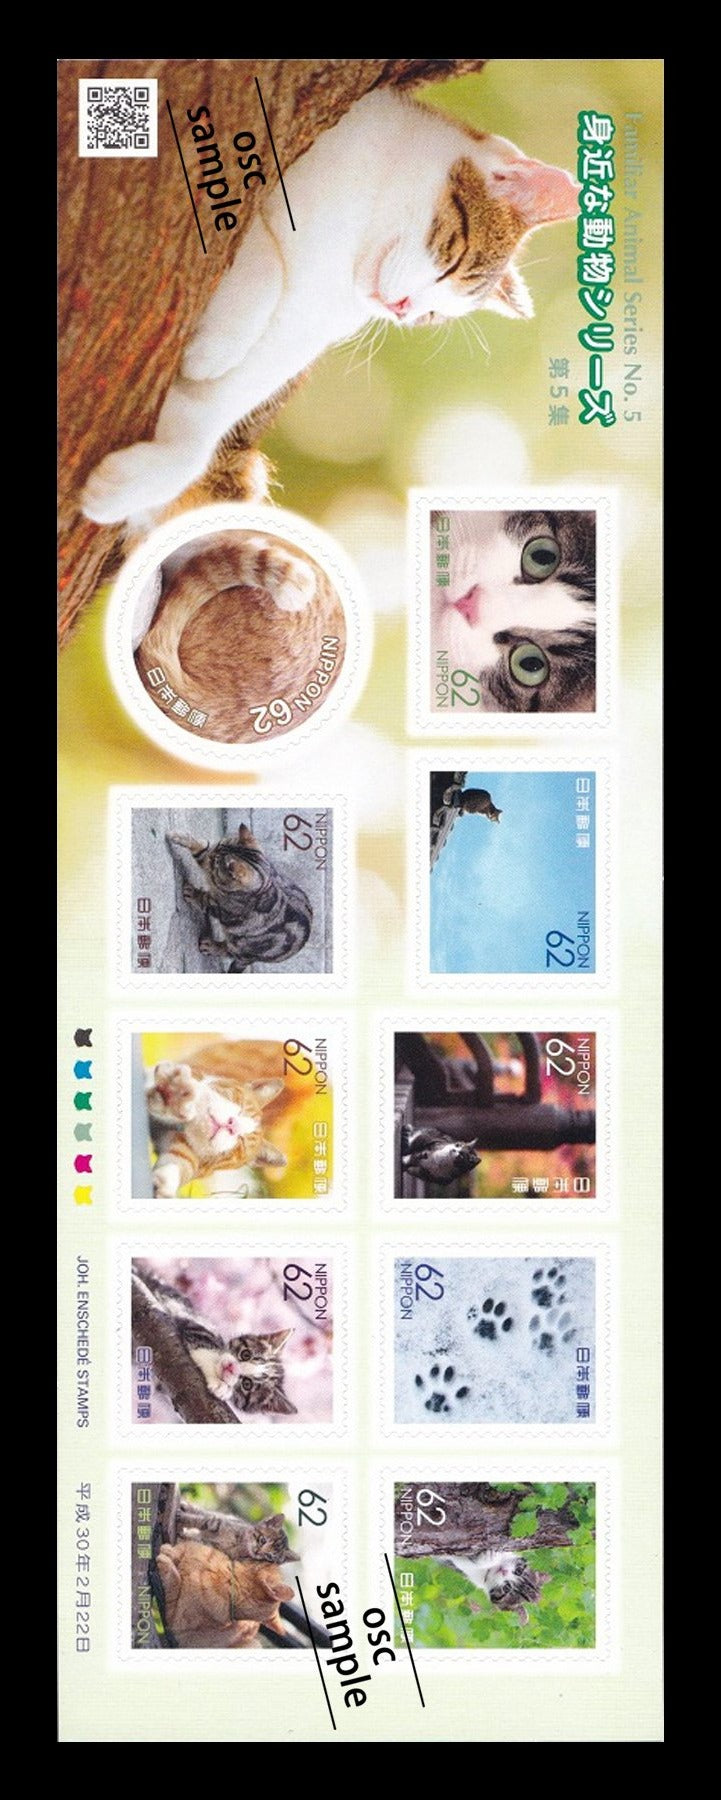 Familiar Animal Series Vol.5 (Cat Ver. / 62 yen)